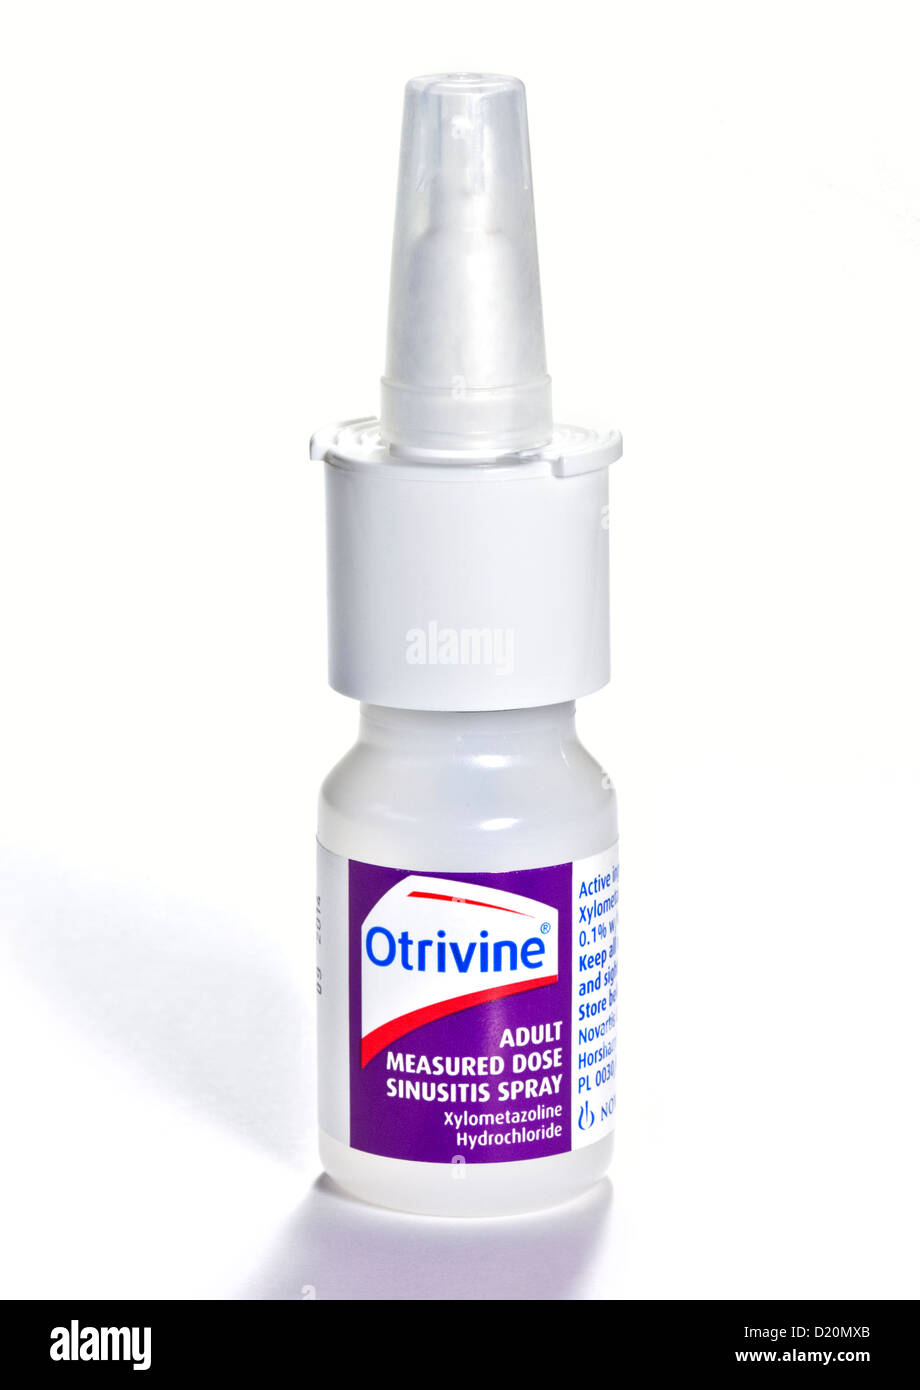 Otrivine Adult Measured Dose Sinusitis Spray/Nasal Spray Stock Photo